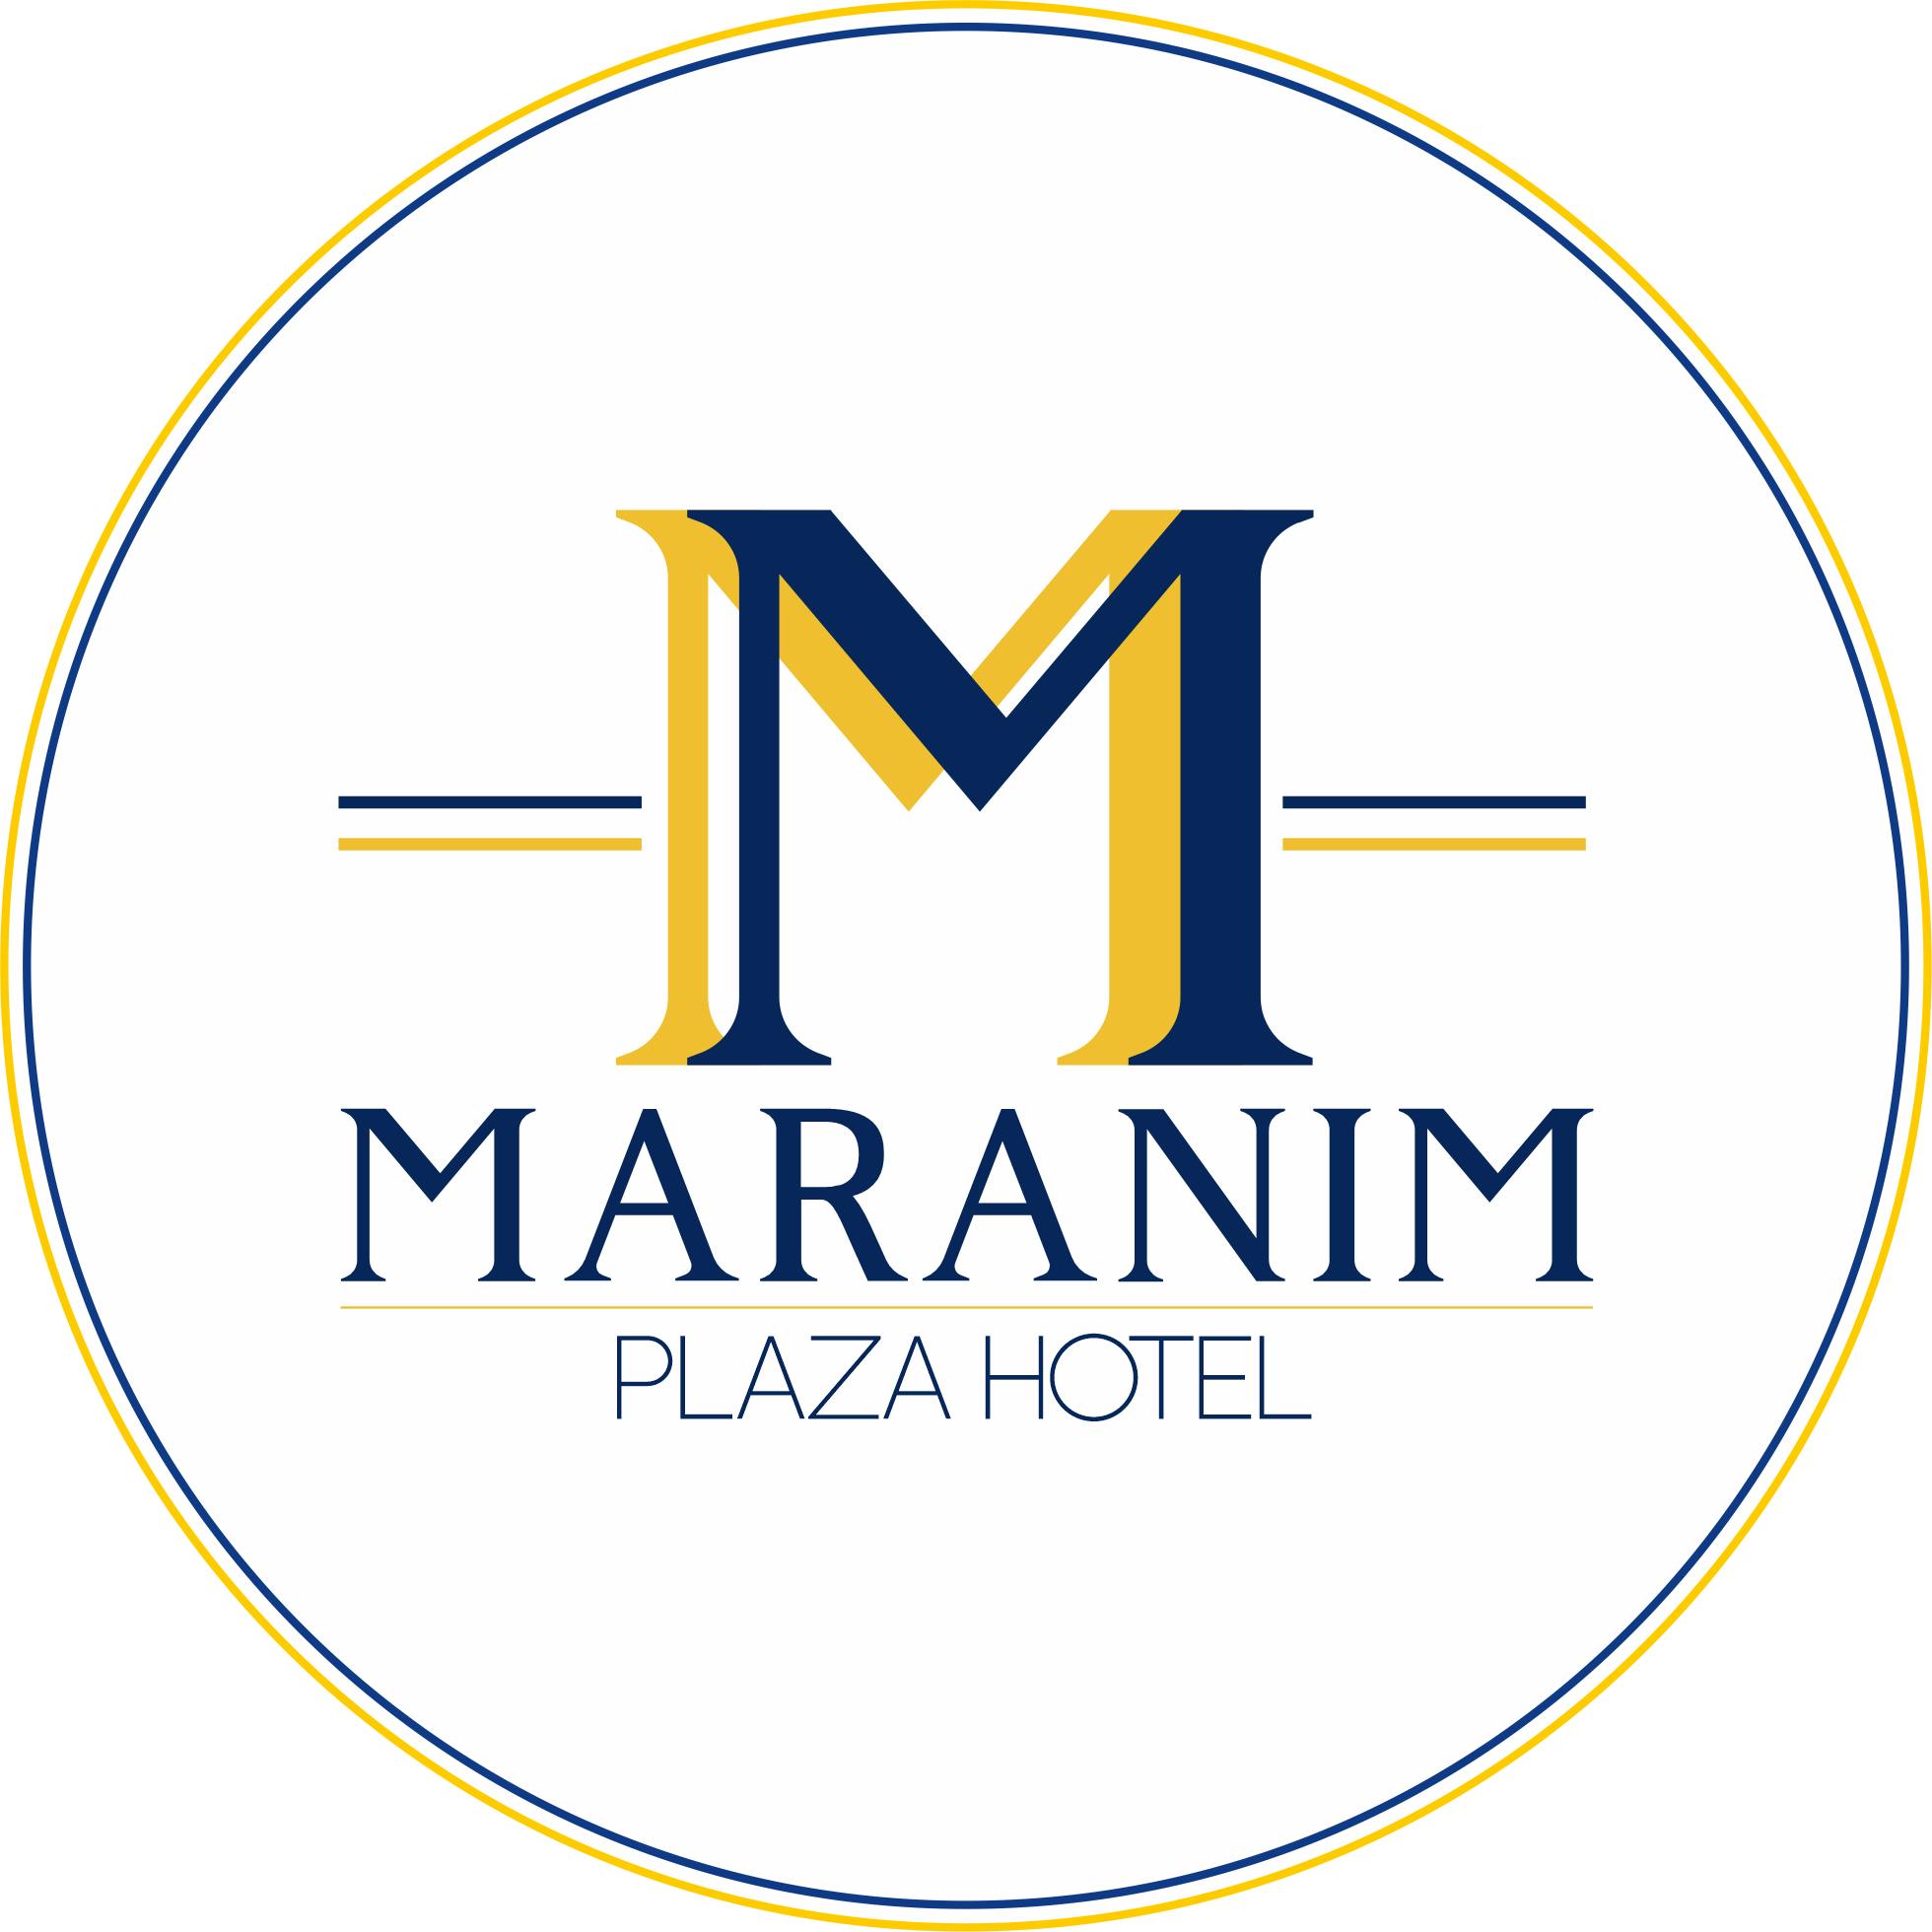 Maranim Plaza Hotel